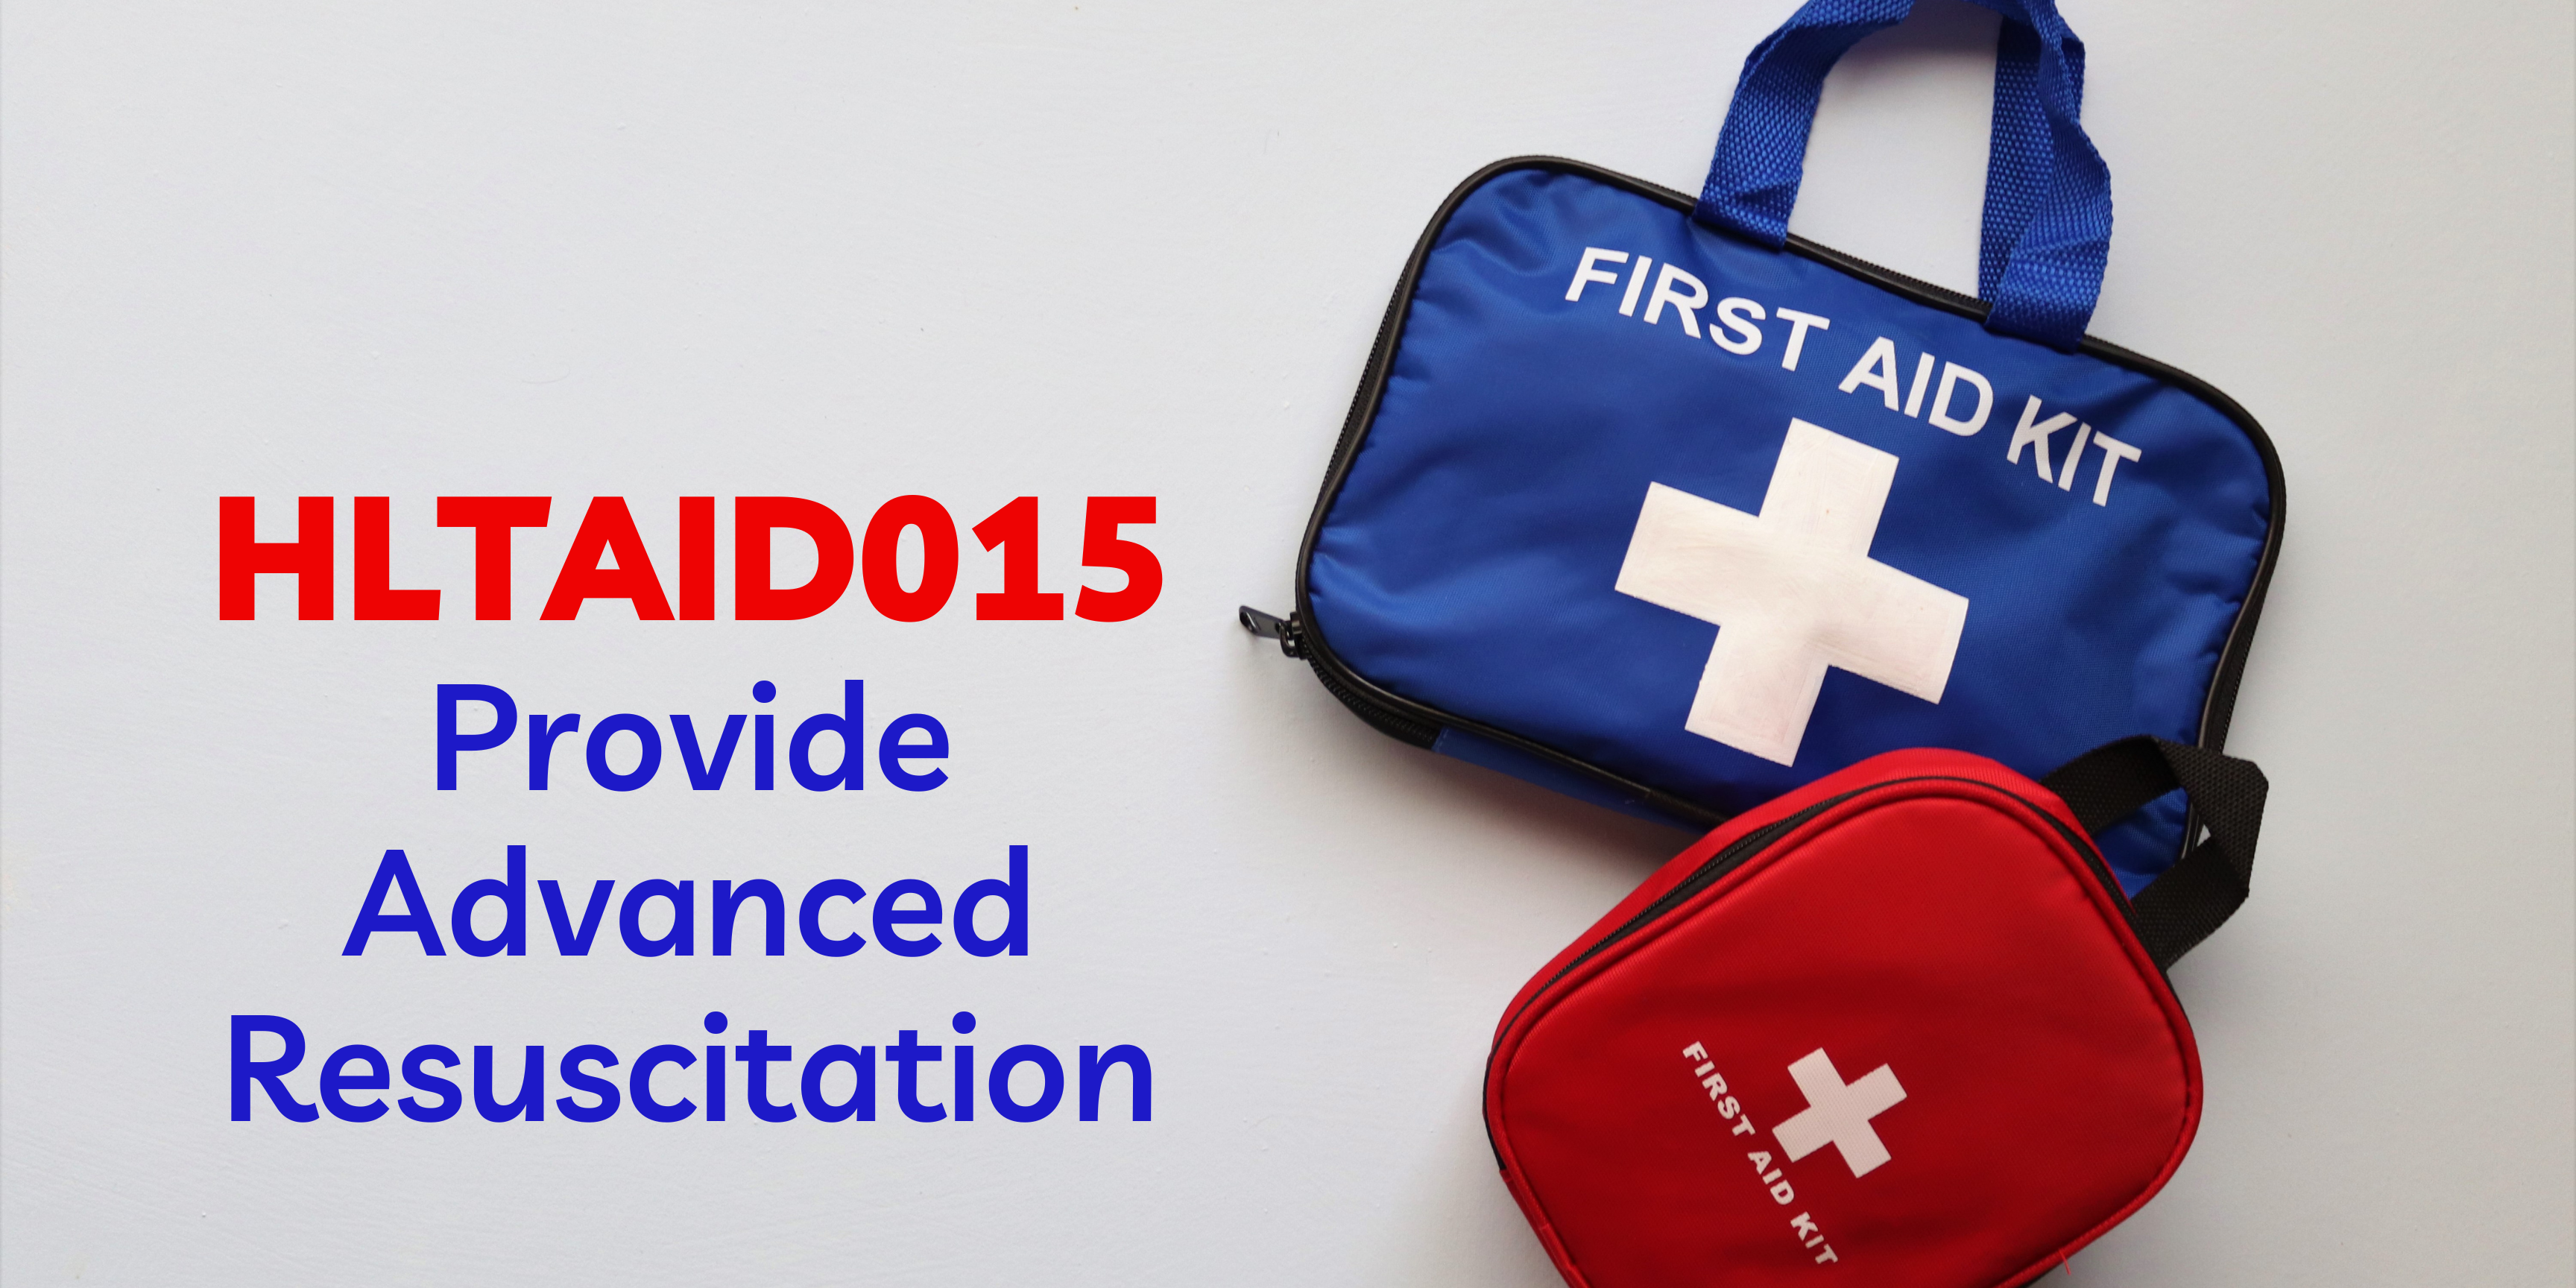 HLTAID015 Provide Advanced Resuscitation